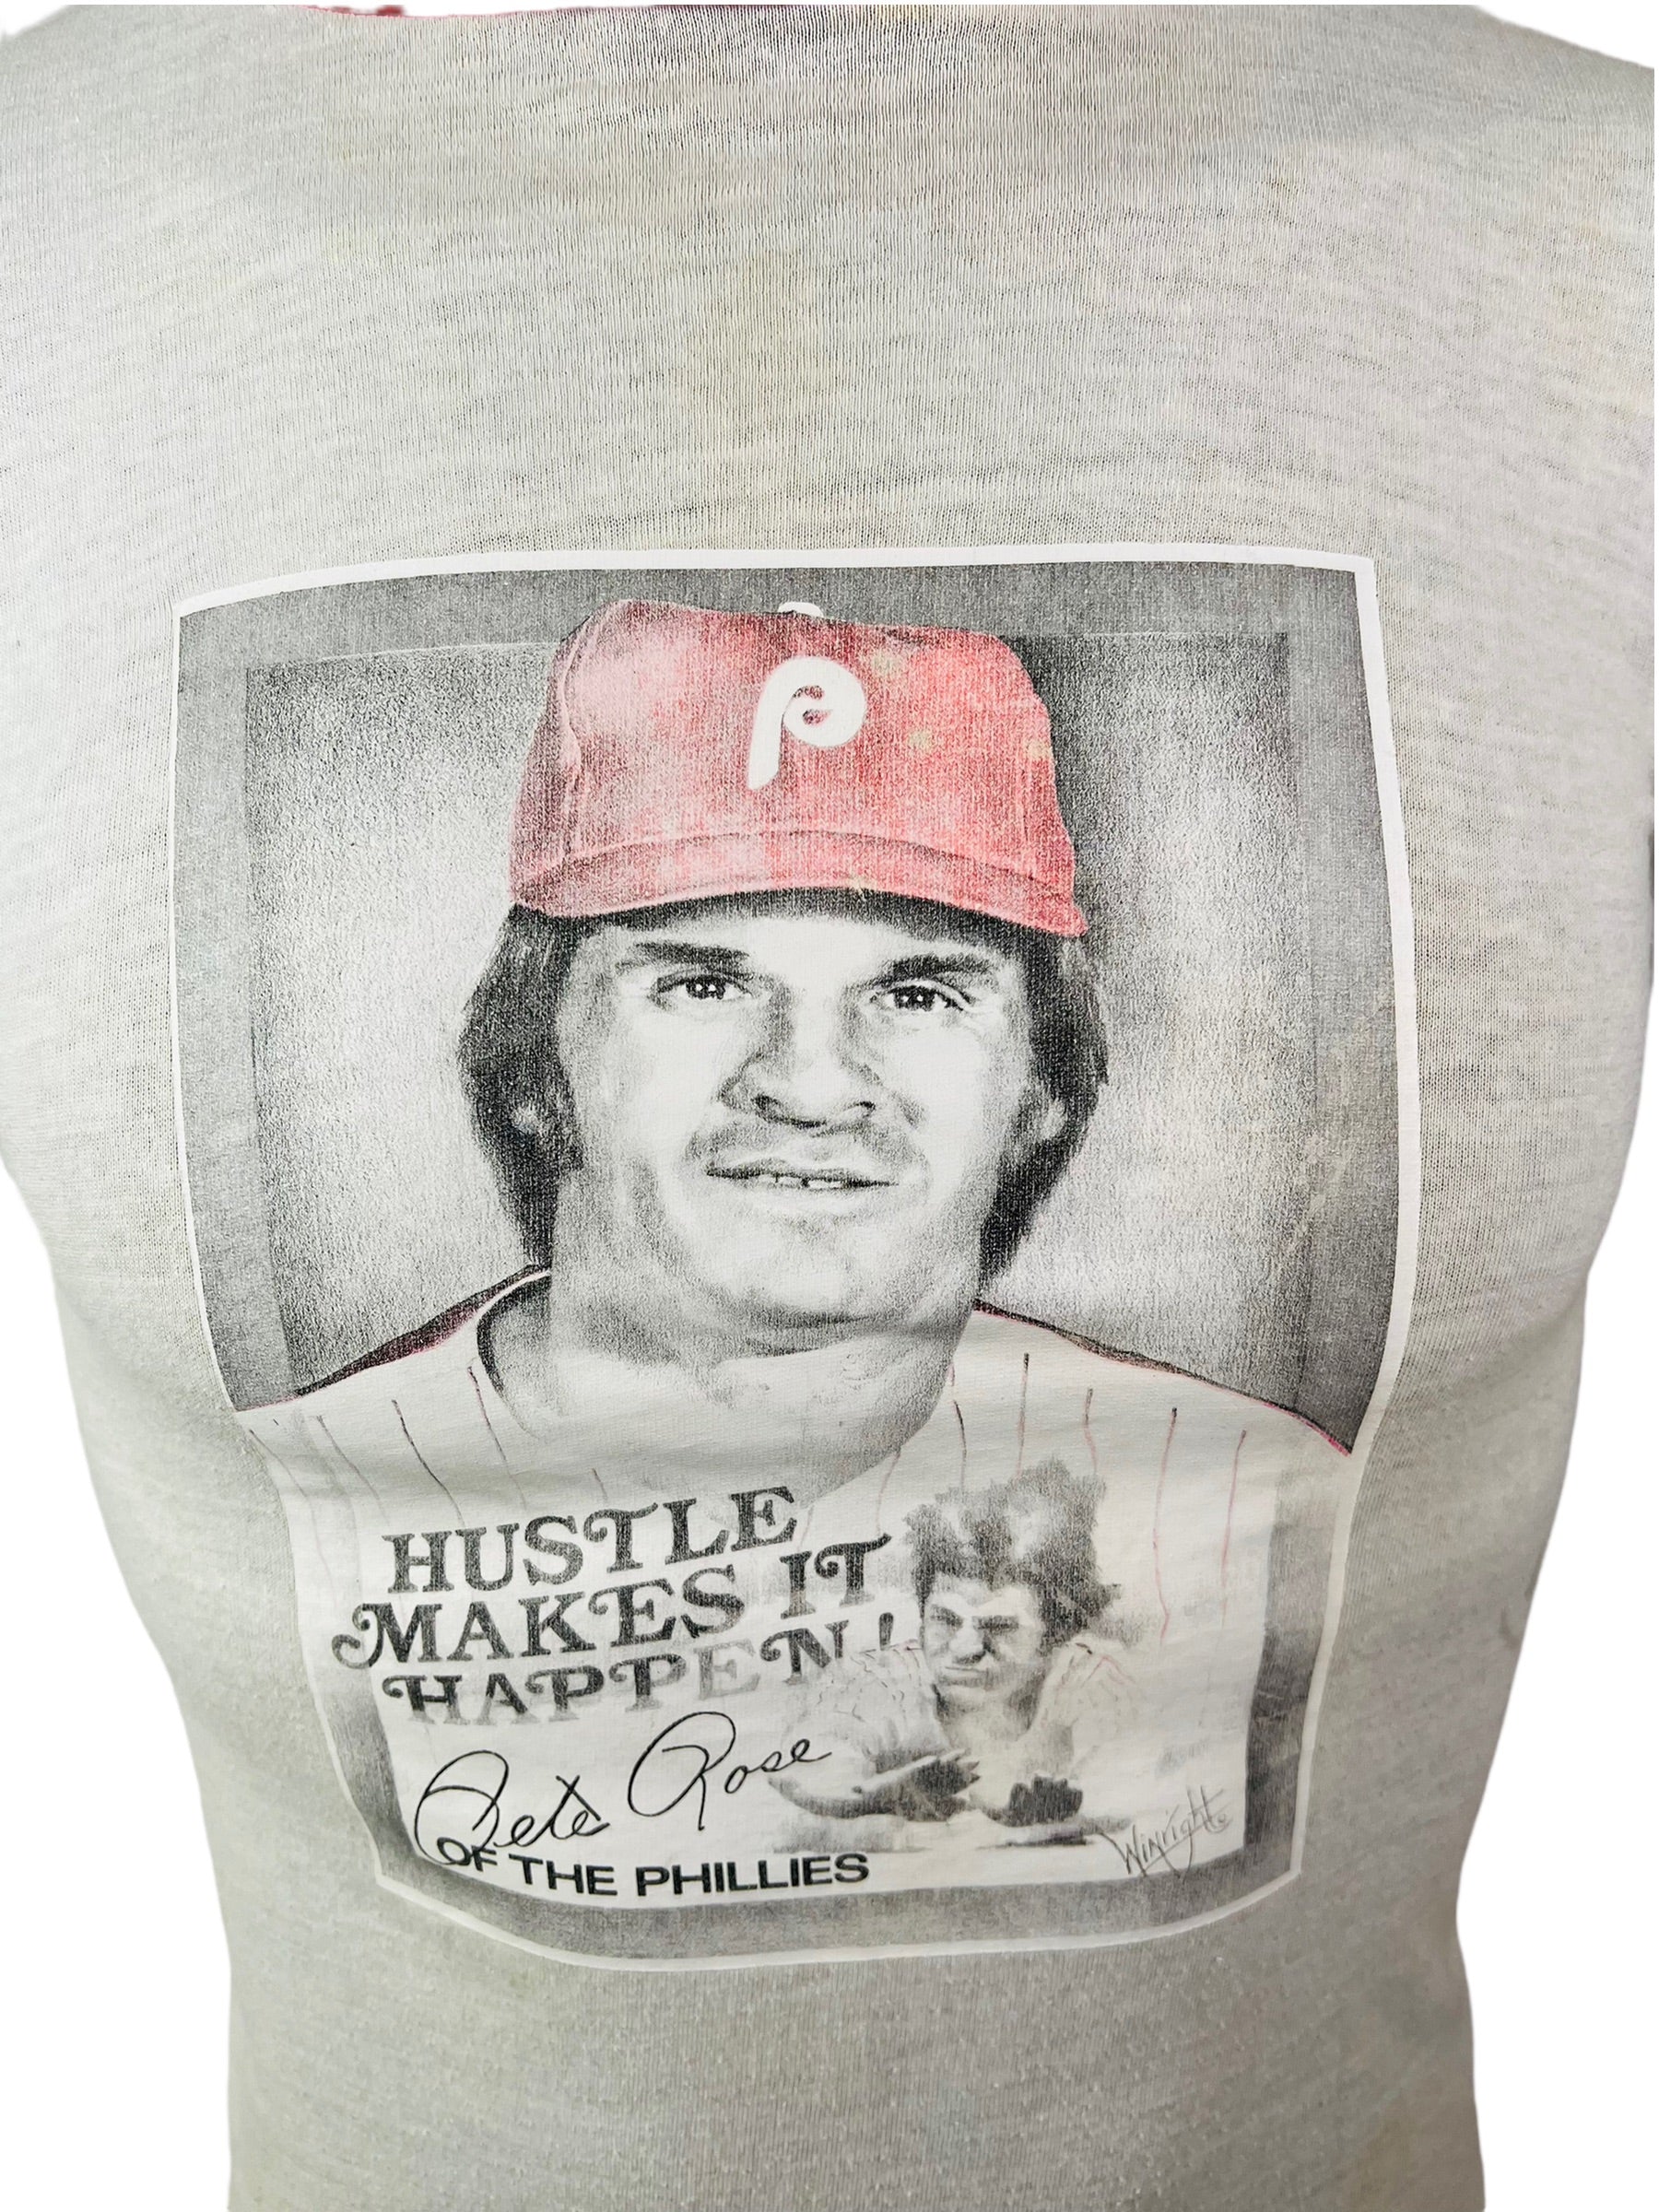 Pete Rose 1980 Philadelphia Phillies Home Throwback Jersey